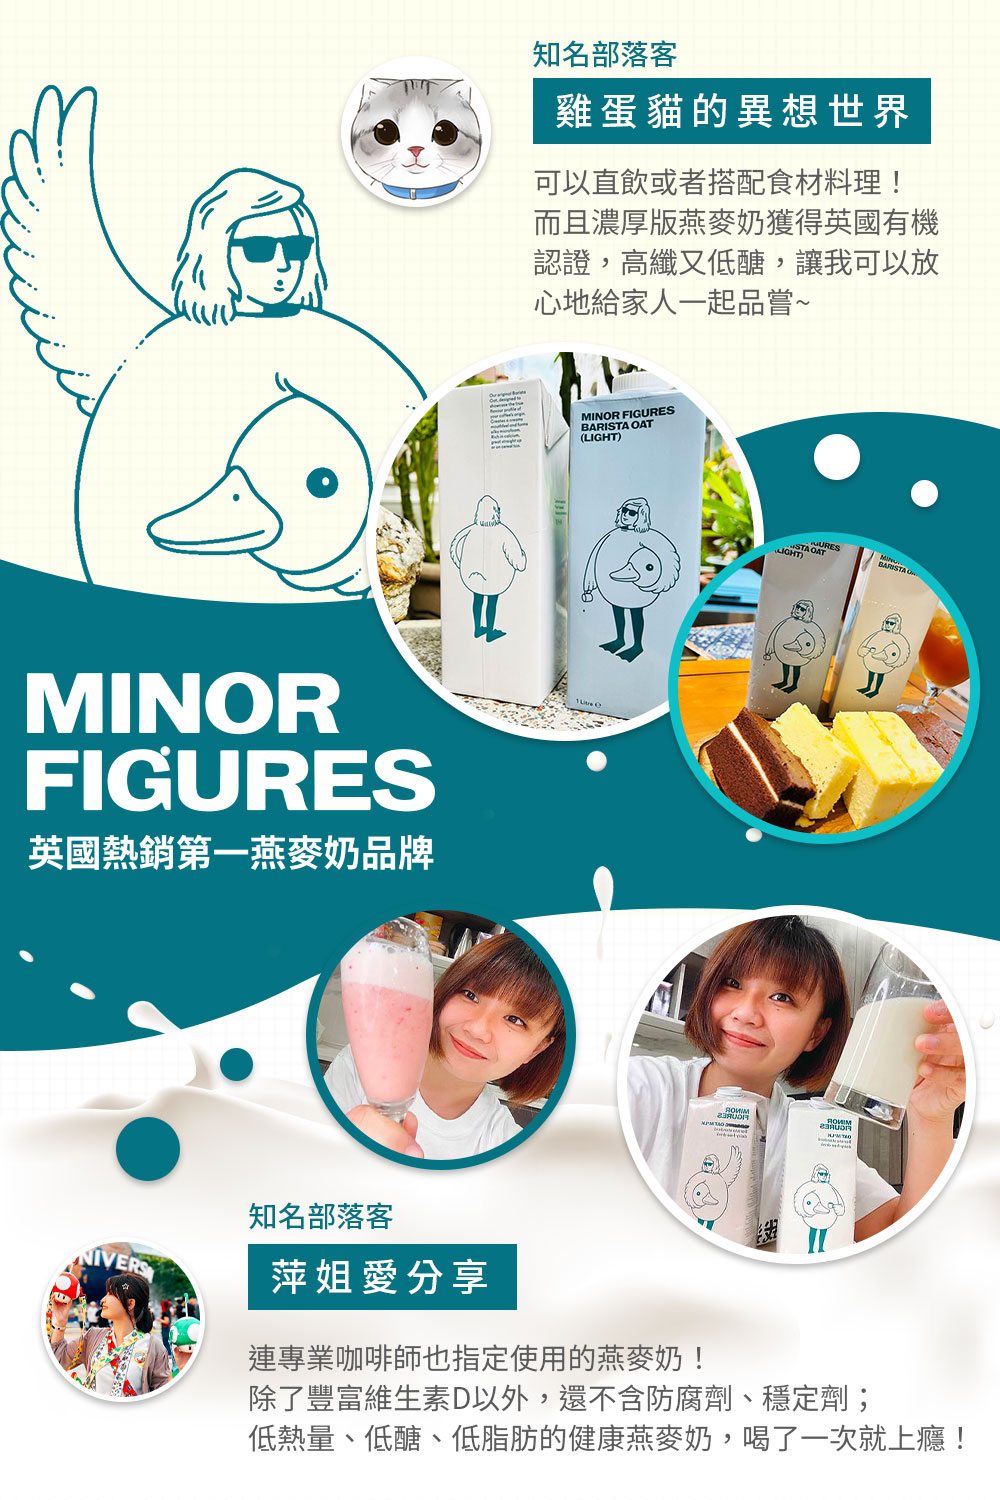 Minor Figures 小人物 燕麥奶-咖啡師精選/濃厚